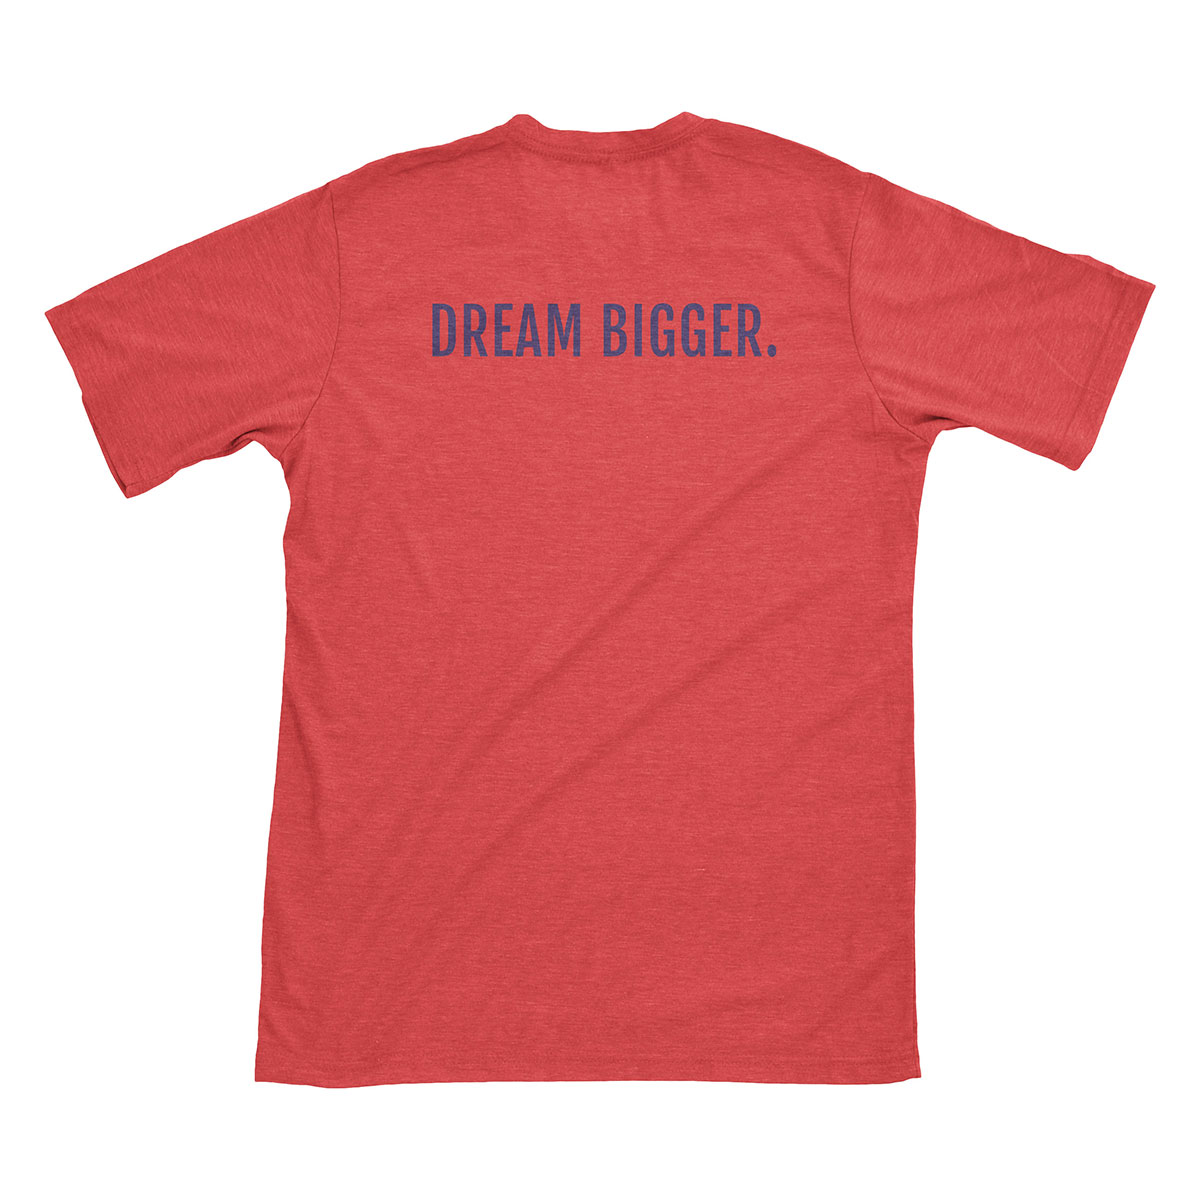 Doubleday Sports Complex T-shirt design